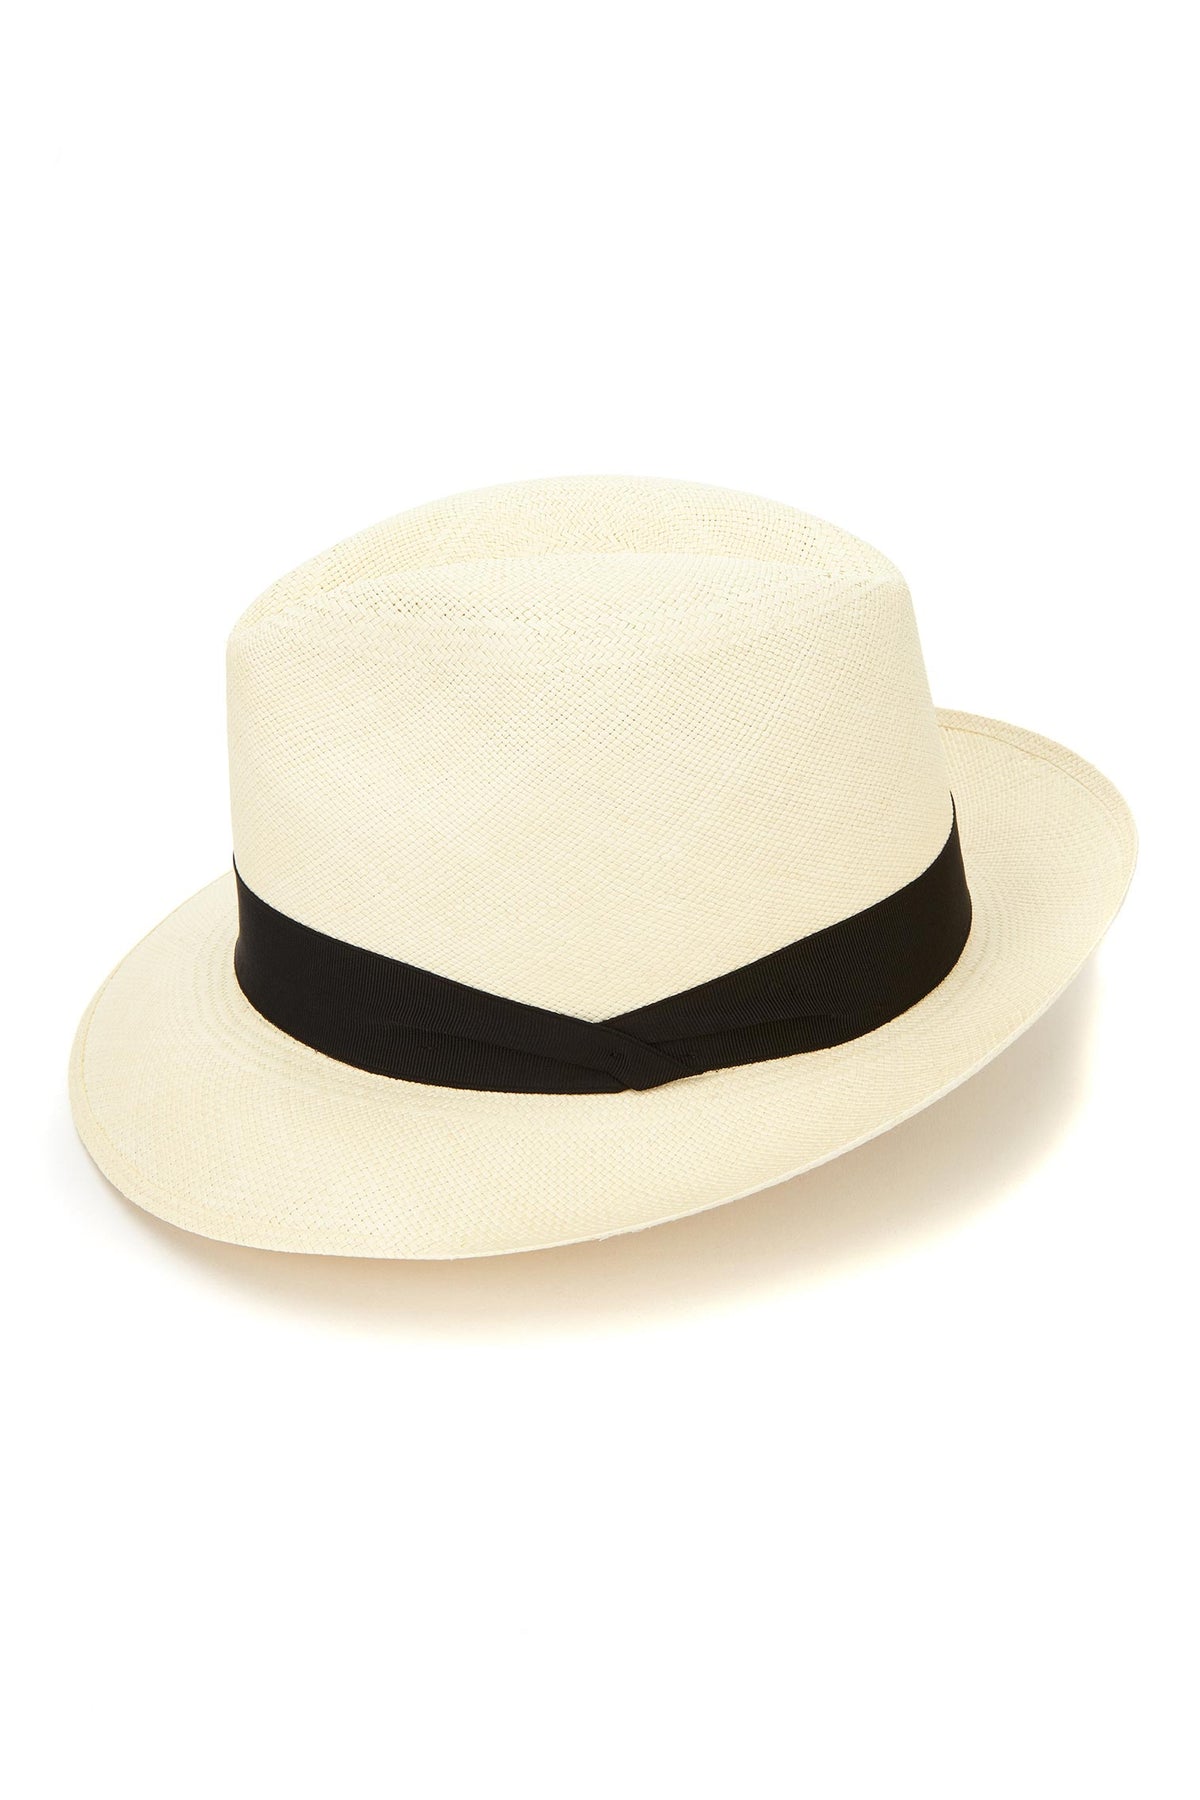 Classic Panama Hat - Lock & Co. Hats for Men & Women